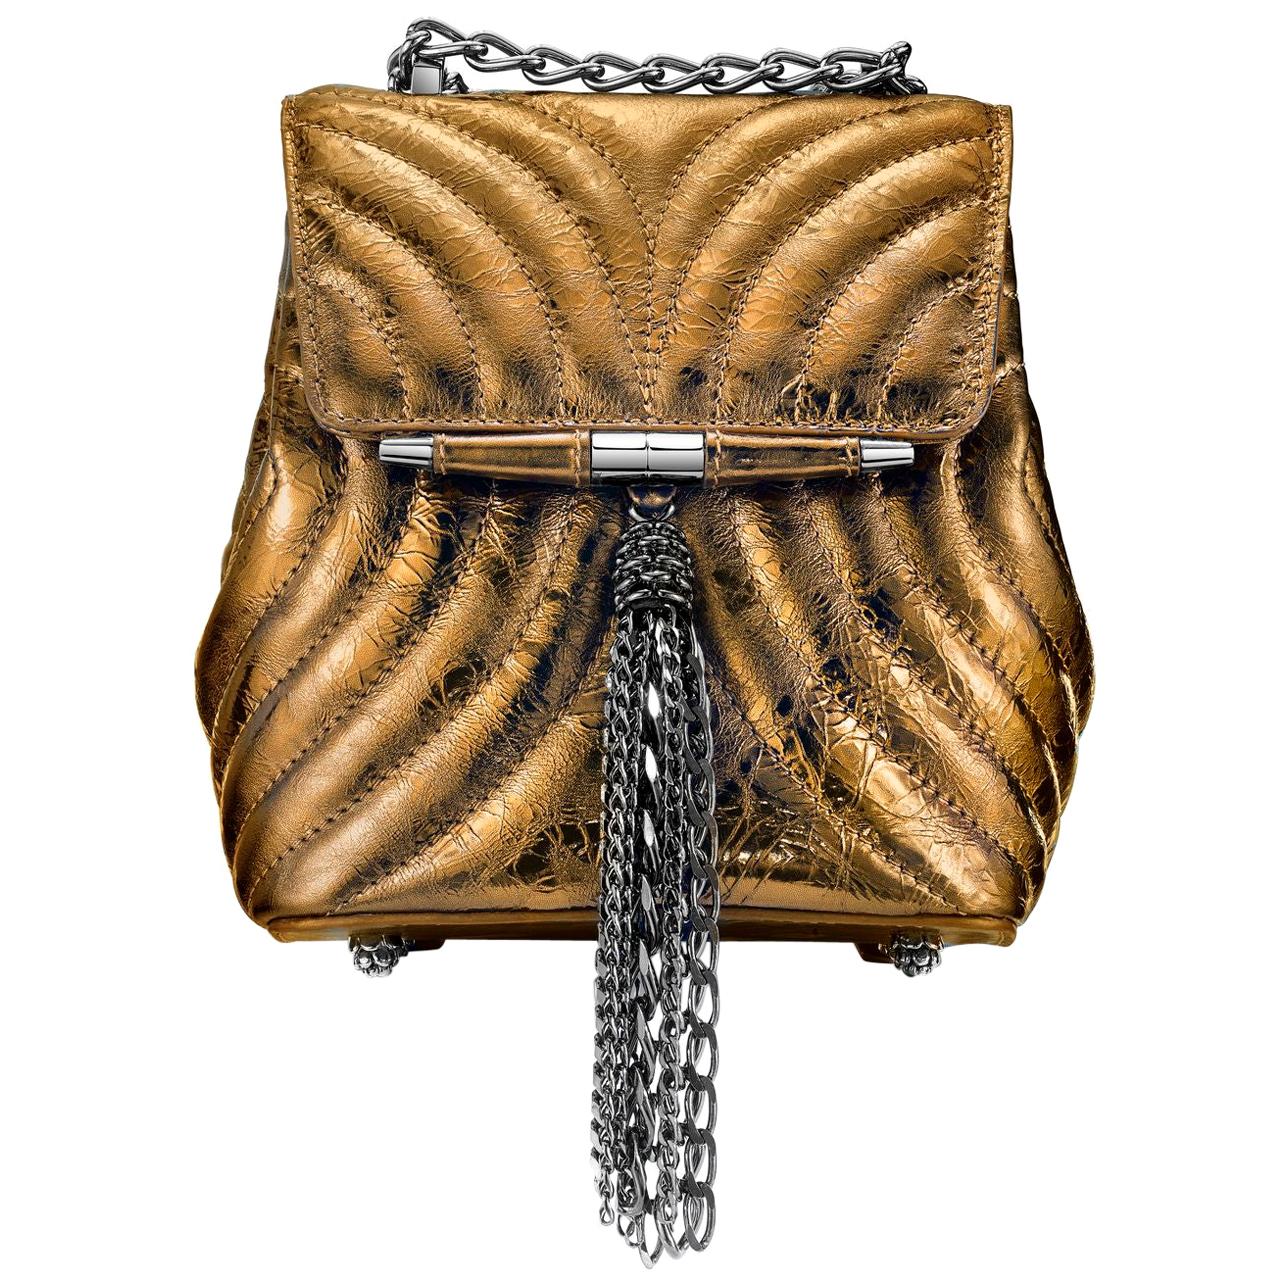 TYLER ELLIS Tiffany Backpack Petite in Bronze Leather with Gunmetal Hardware